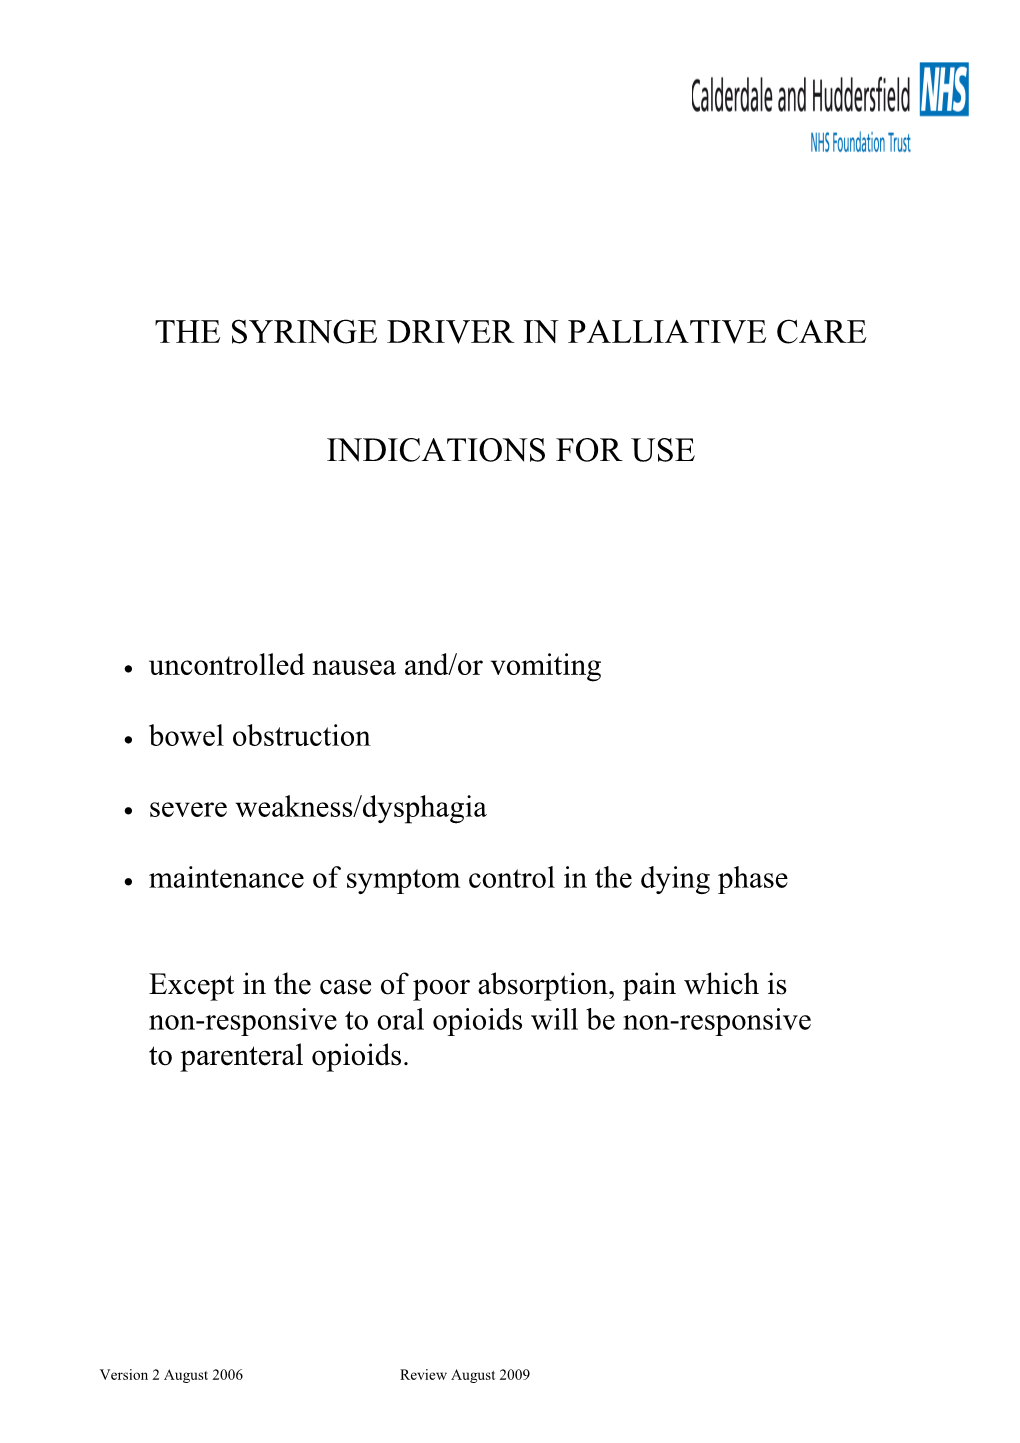 The Syringe Driver in Palliative Care